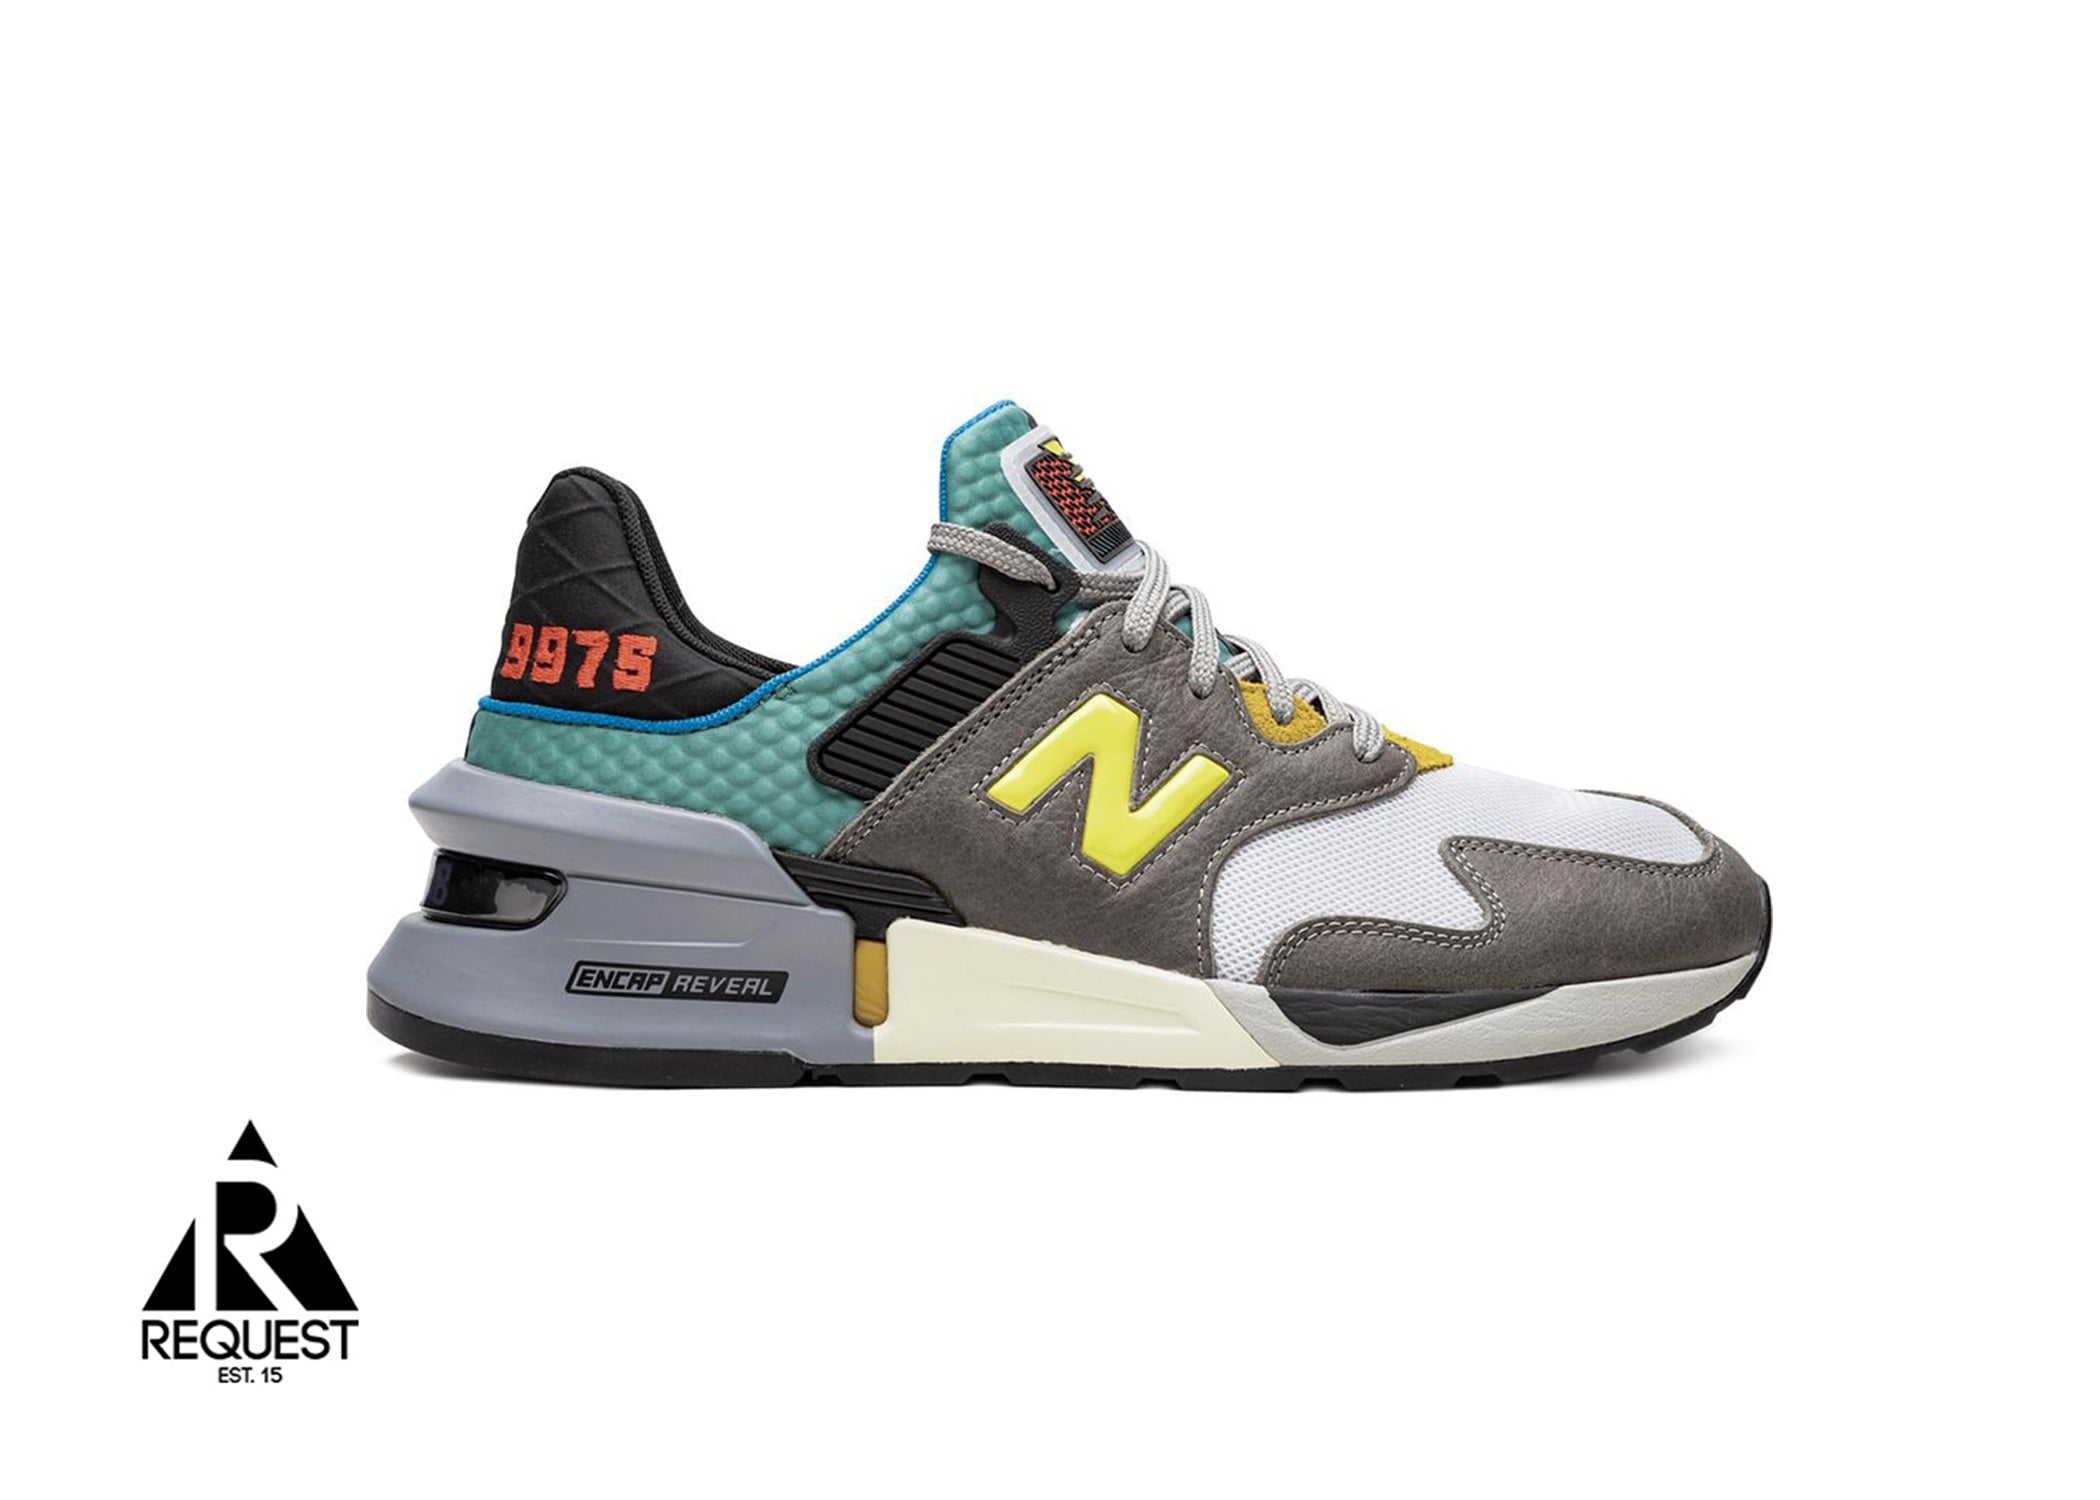 New Balance 997S “Bodega No Bad Days NB”